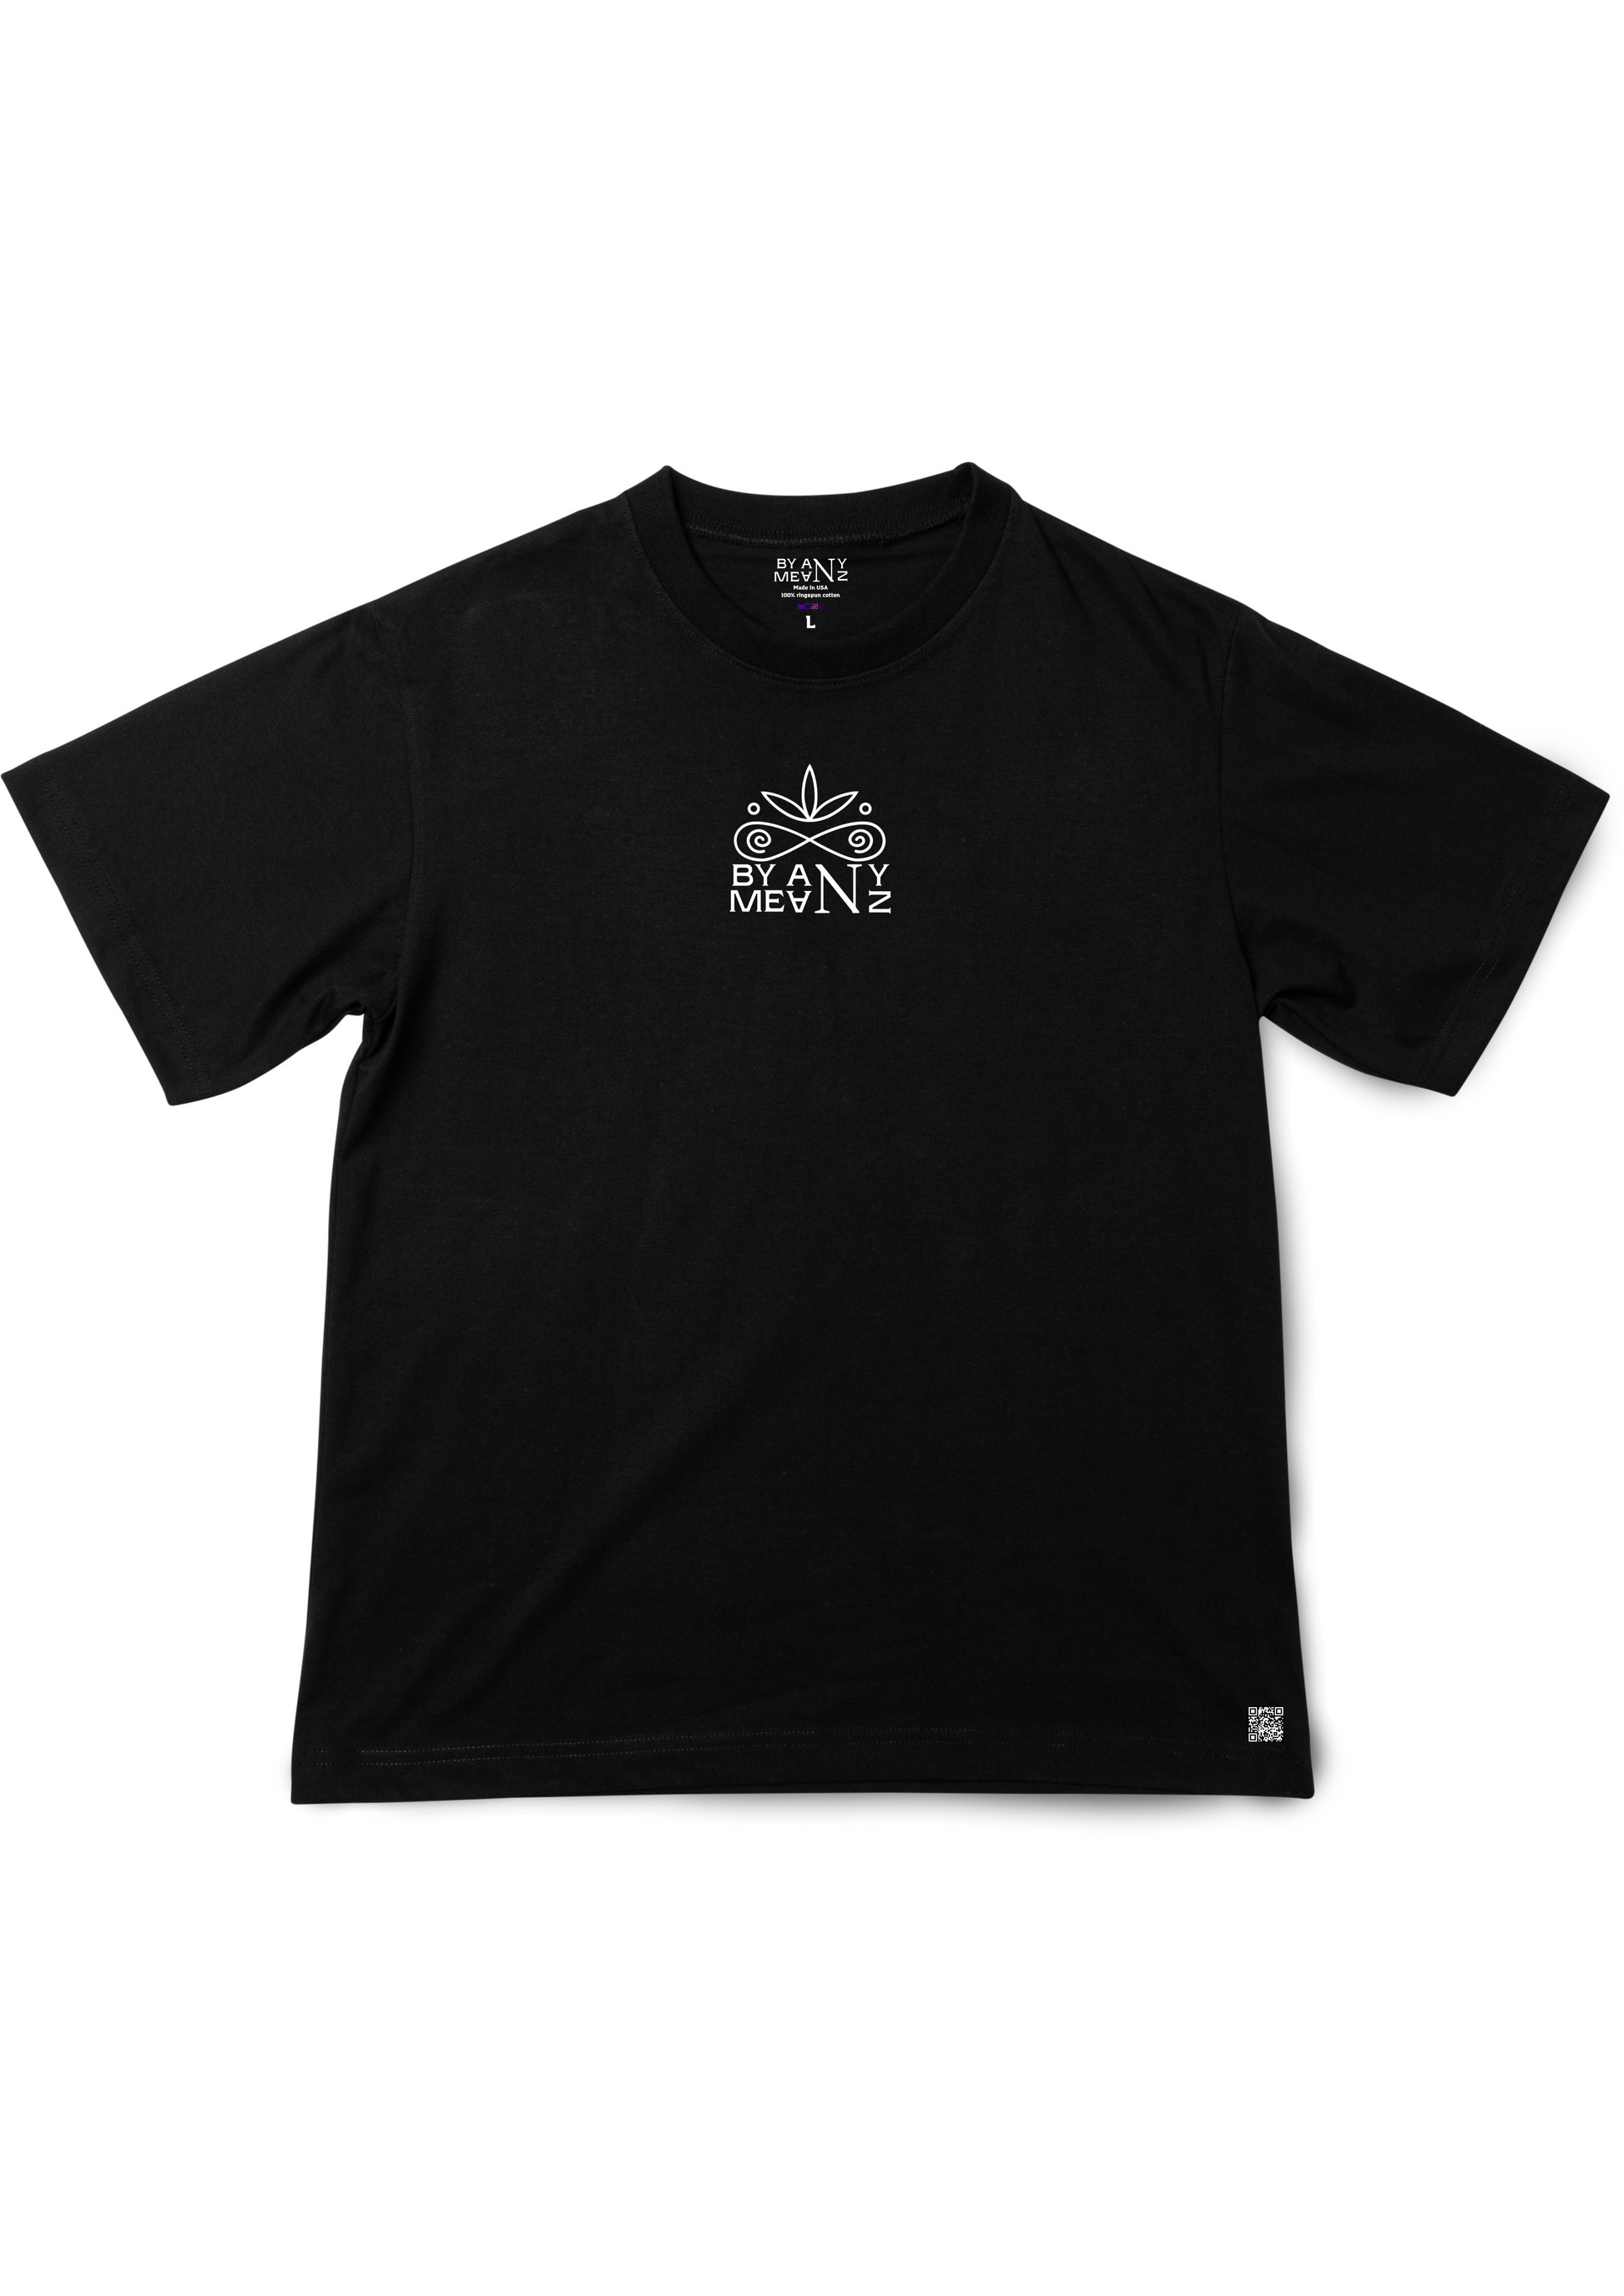 LIF Black Shirt Front